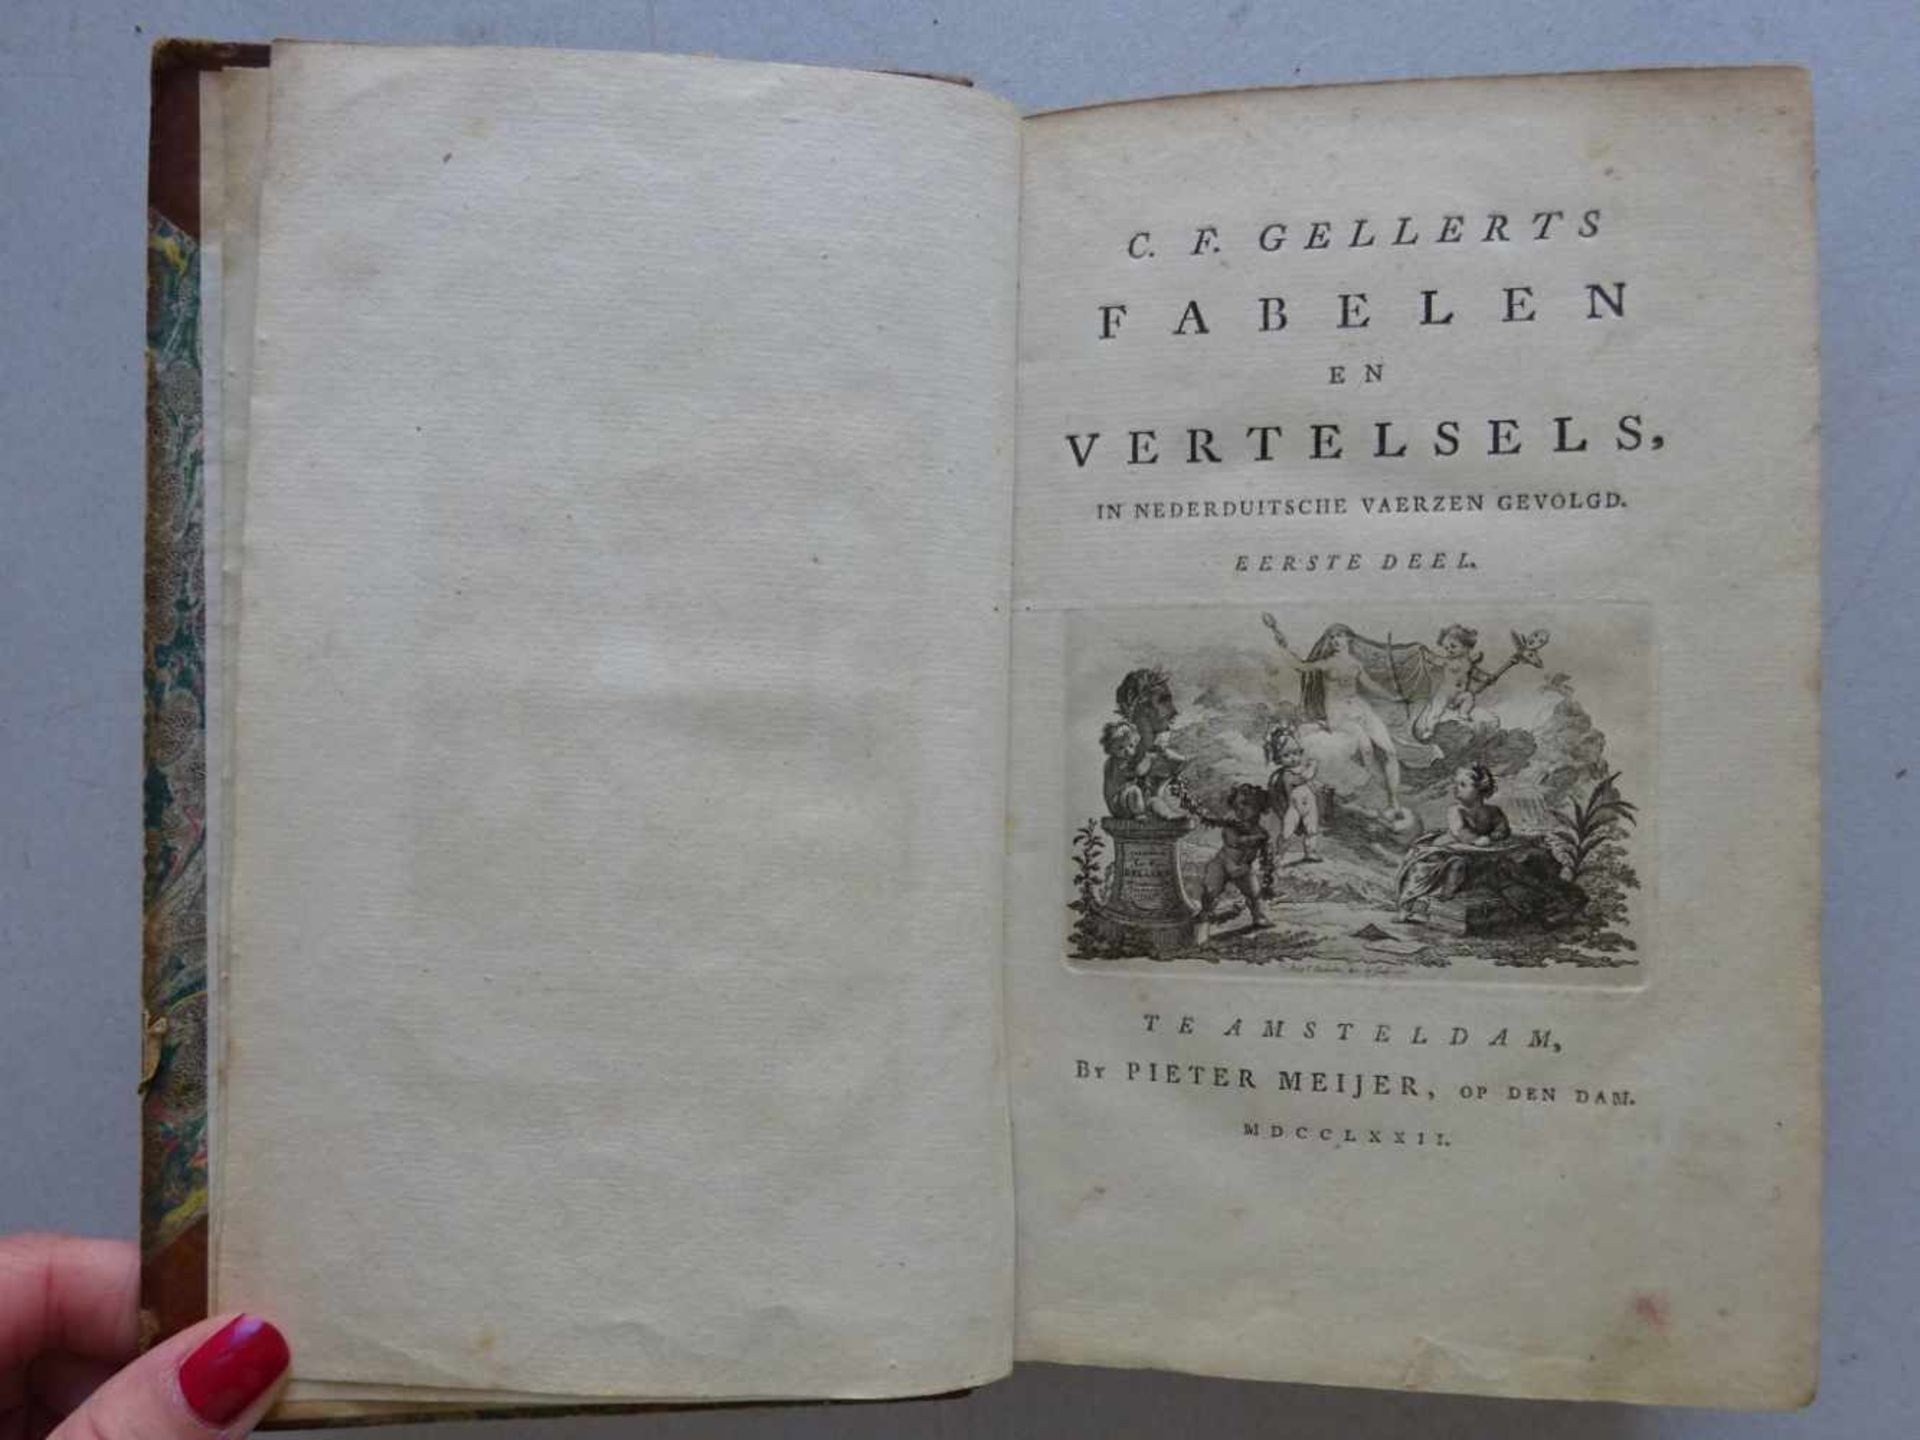 Fabeln.- Gellert, C.F.Fabelen en Vertelsels, in nederduitsche vaerzen gevolgd. 3 Bde. Amsterdam, - Image 2 of 6